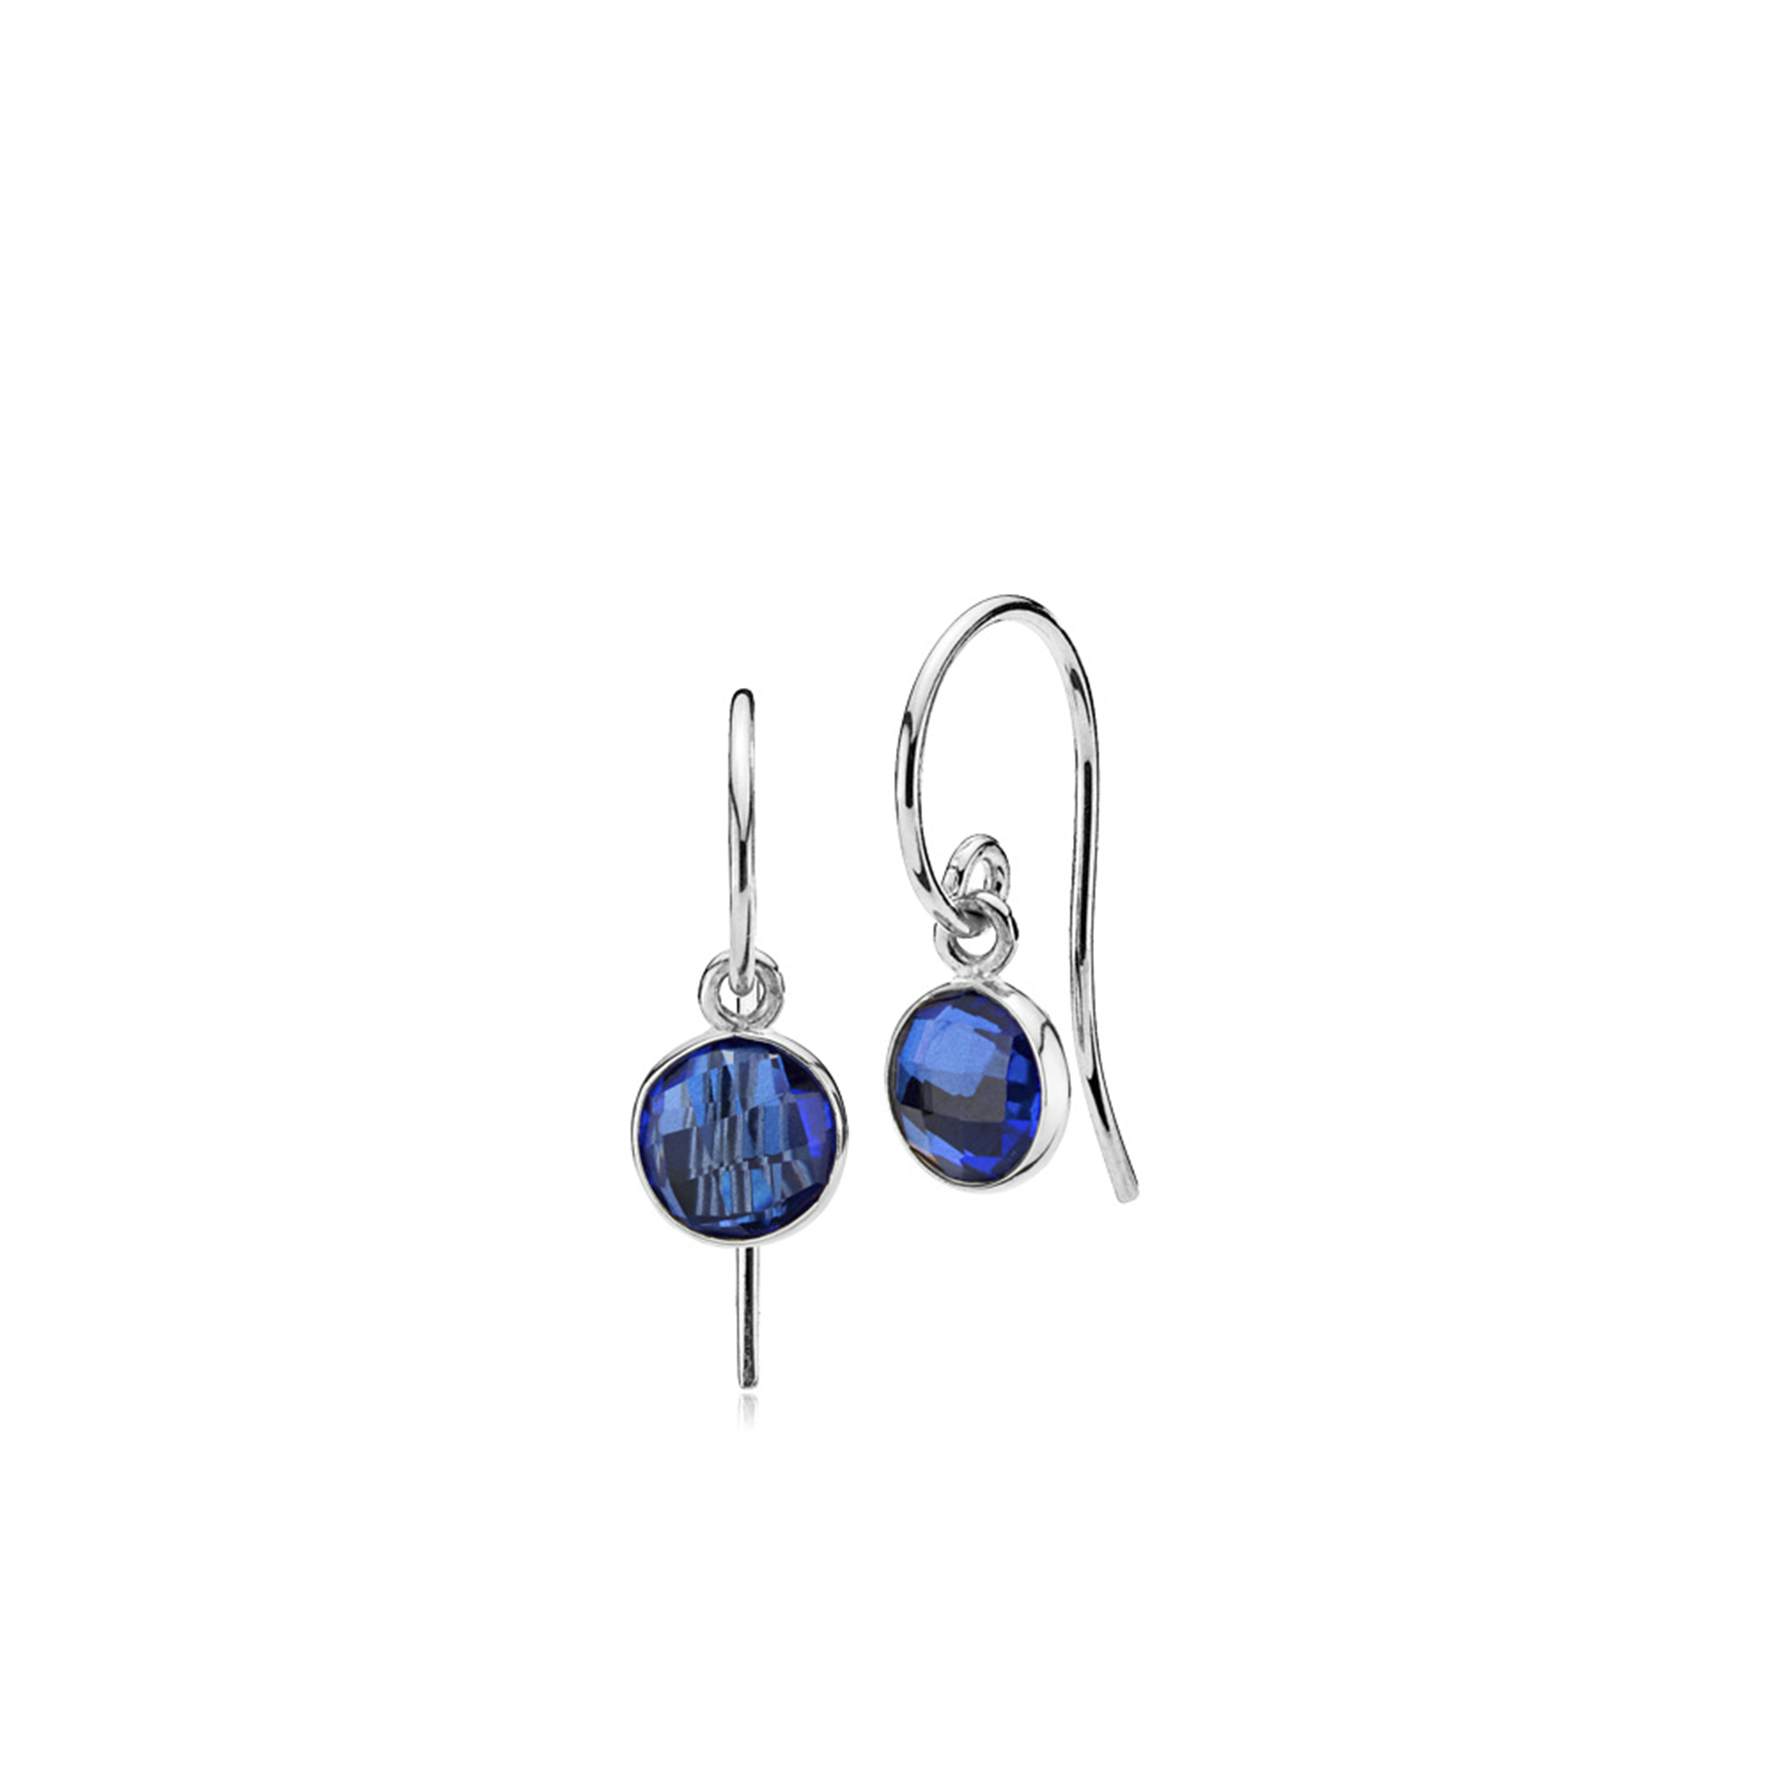 Prima Donna earrings Royal Blue fra Izabel Camille i Sølv Sterling 925